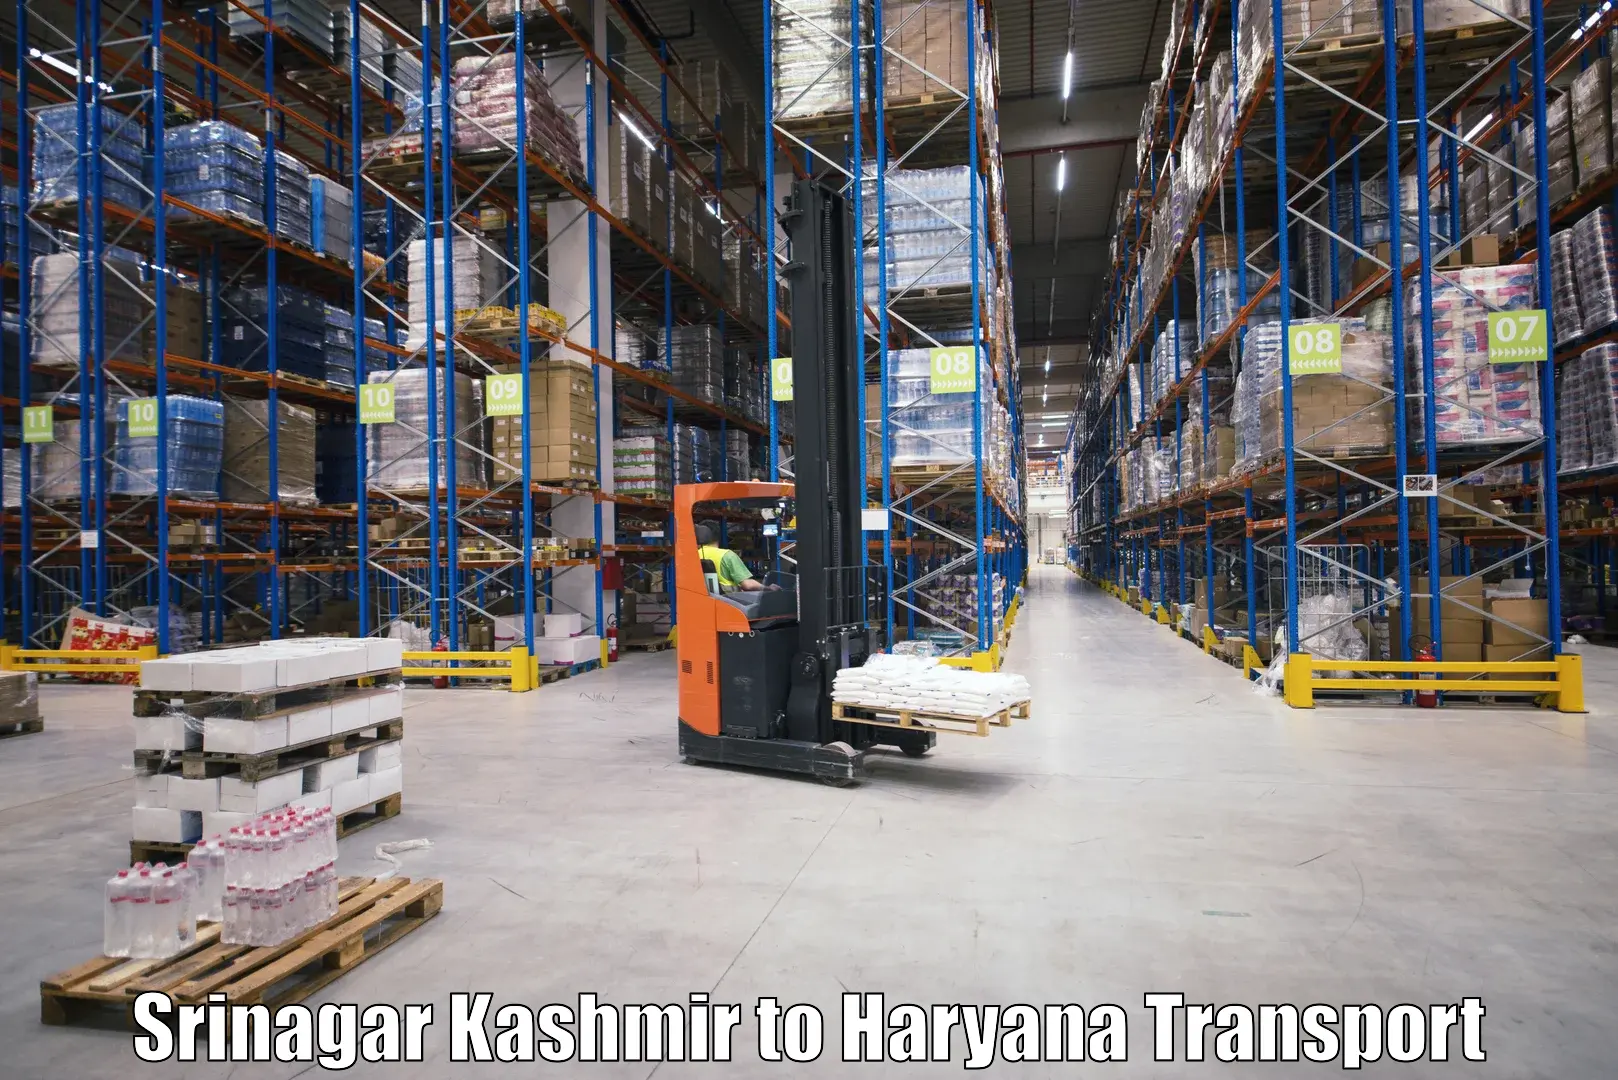 Delivery service Srinagar Kashmir to Gurgaon